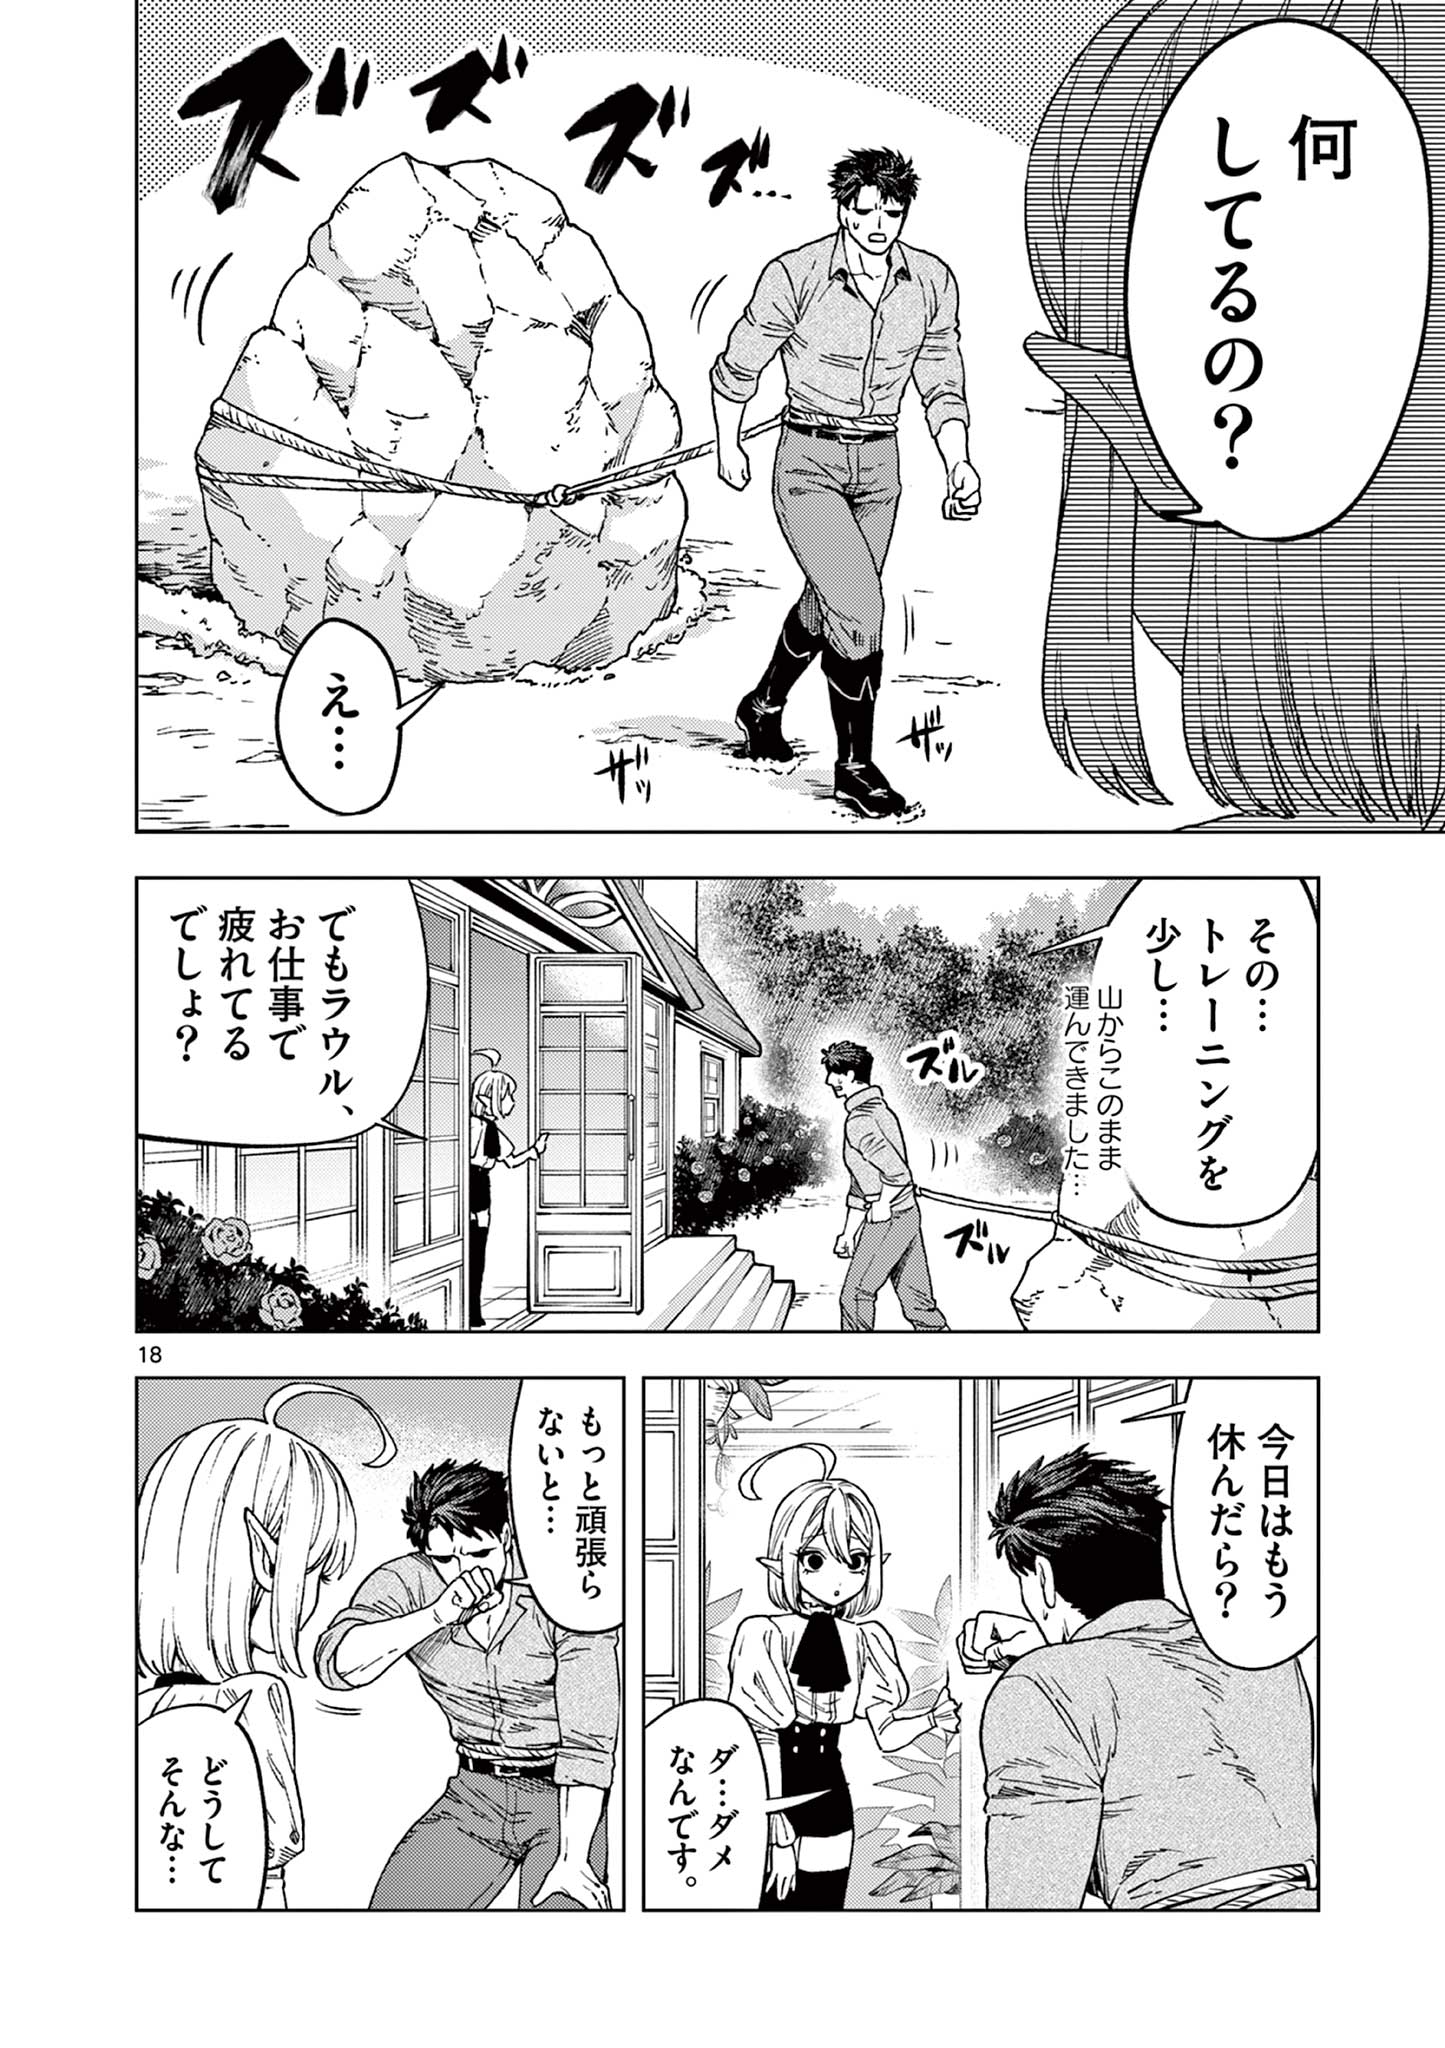 Raul to Kyuuketsuki - Chapter 1 - Page 18